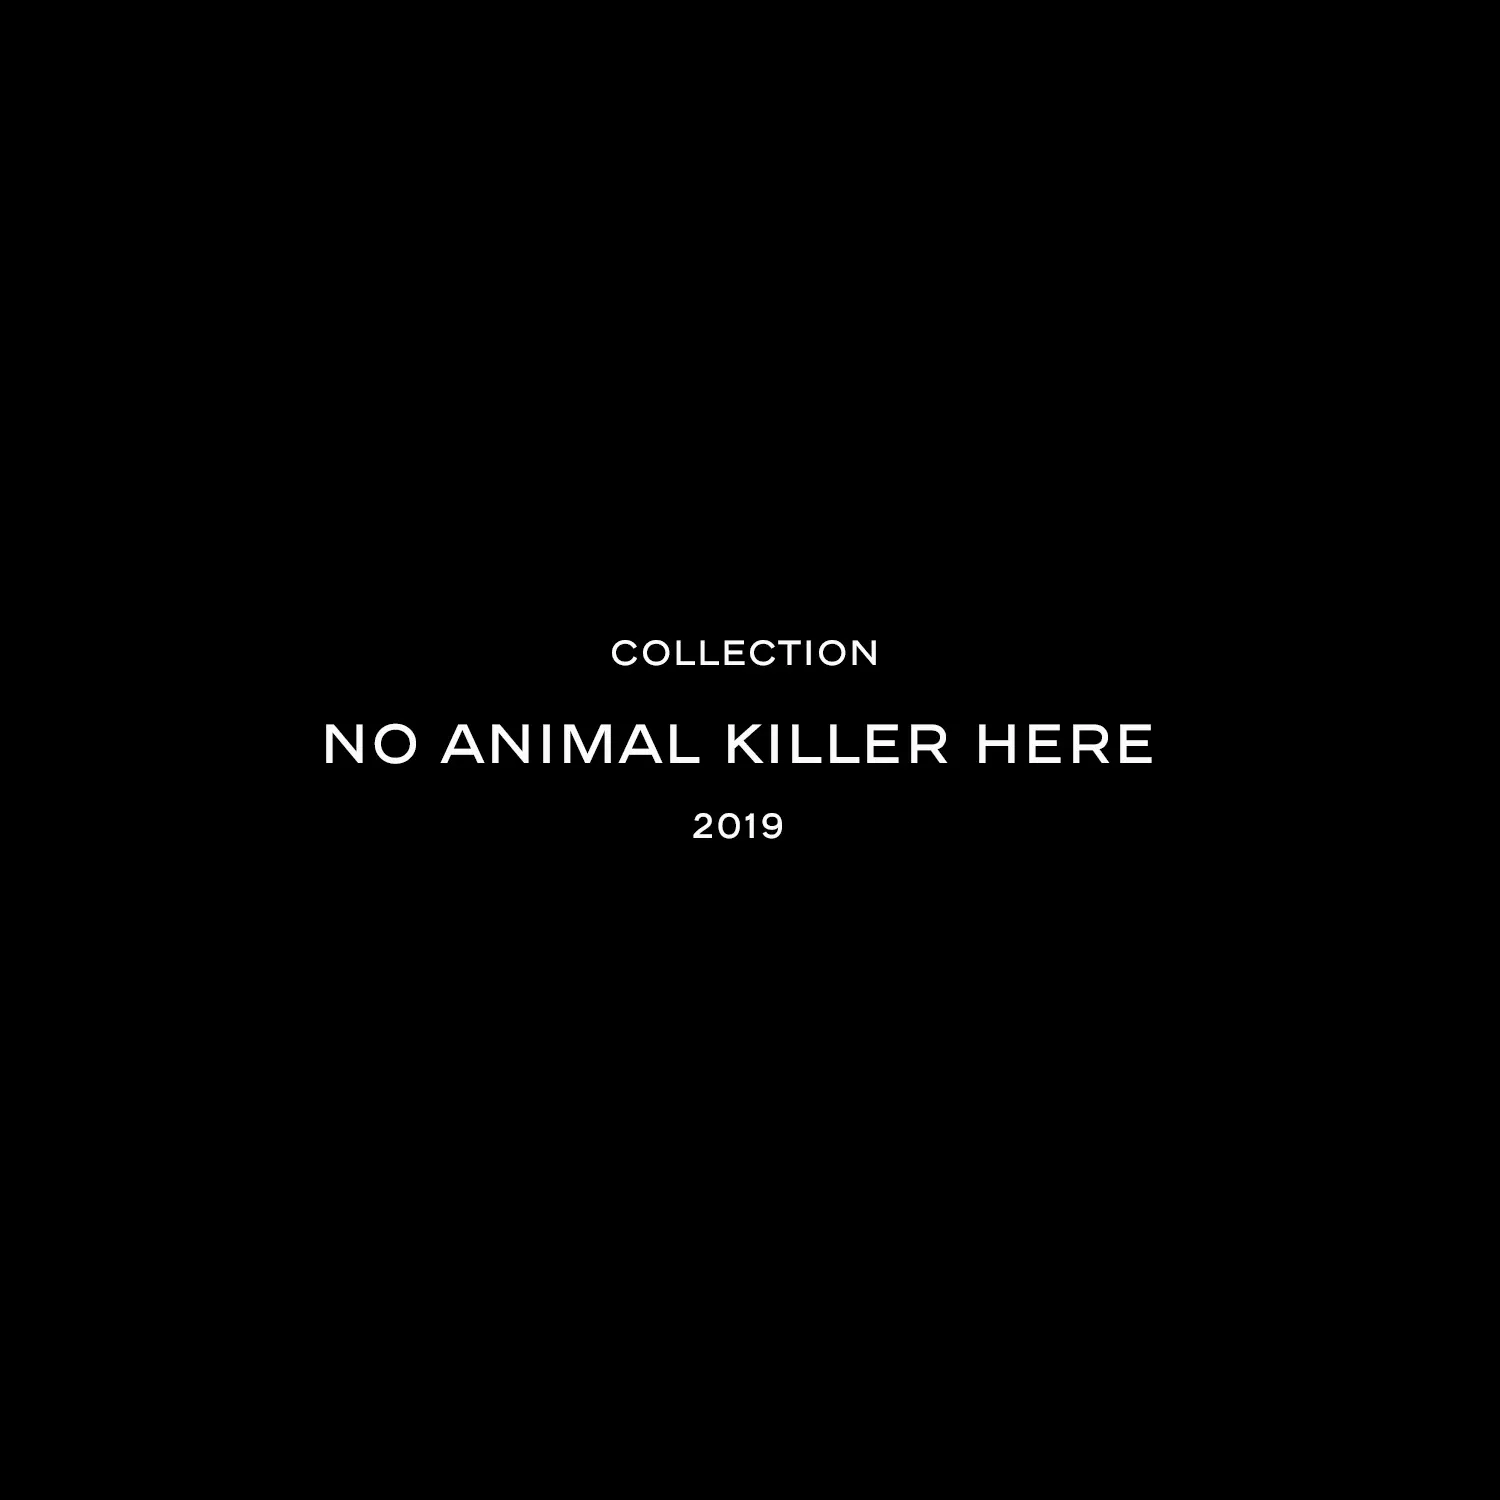 Collection - No Animal Killer Here